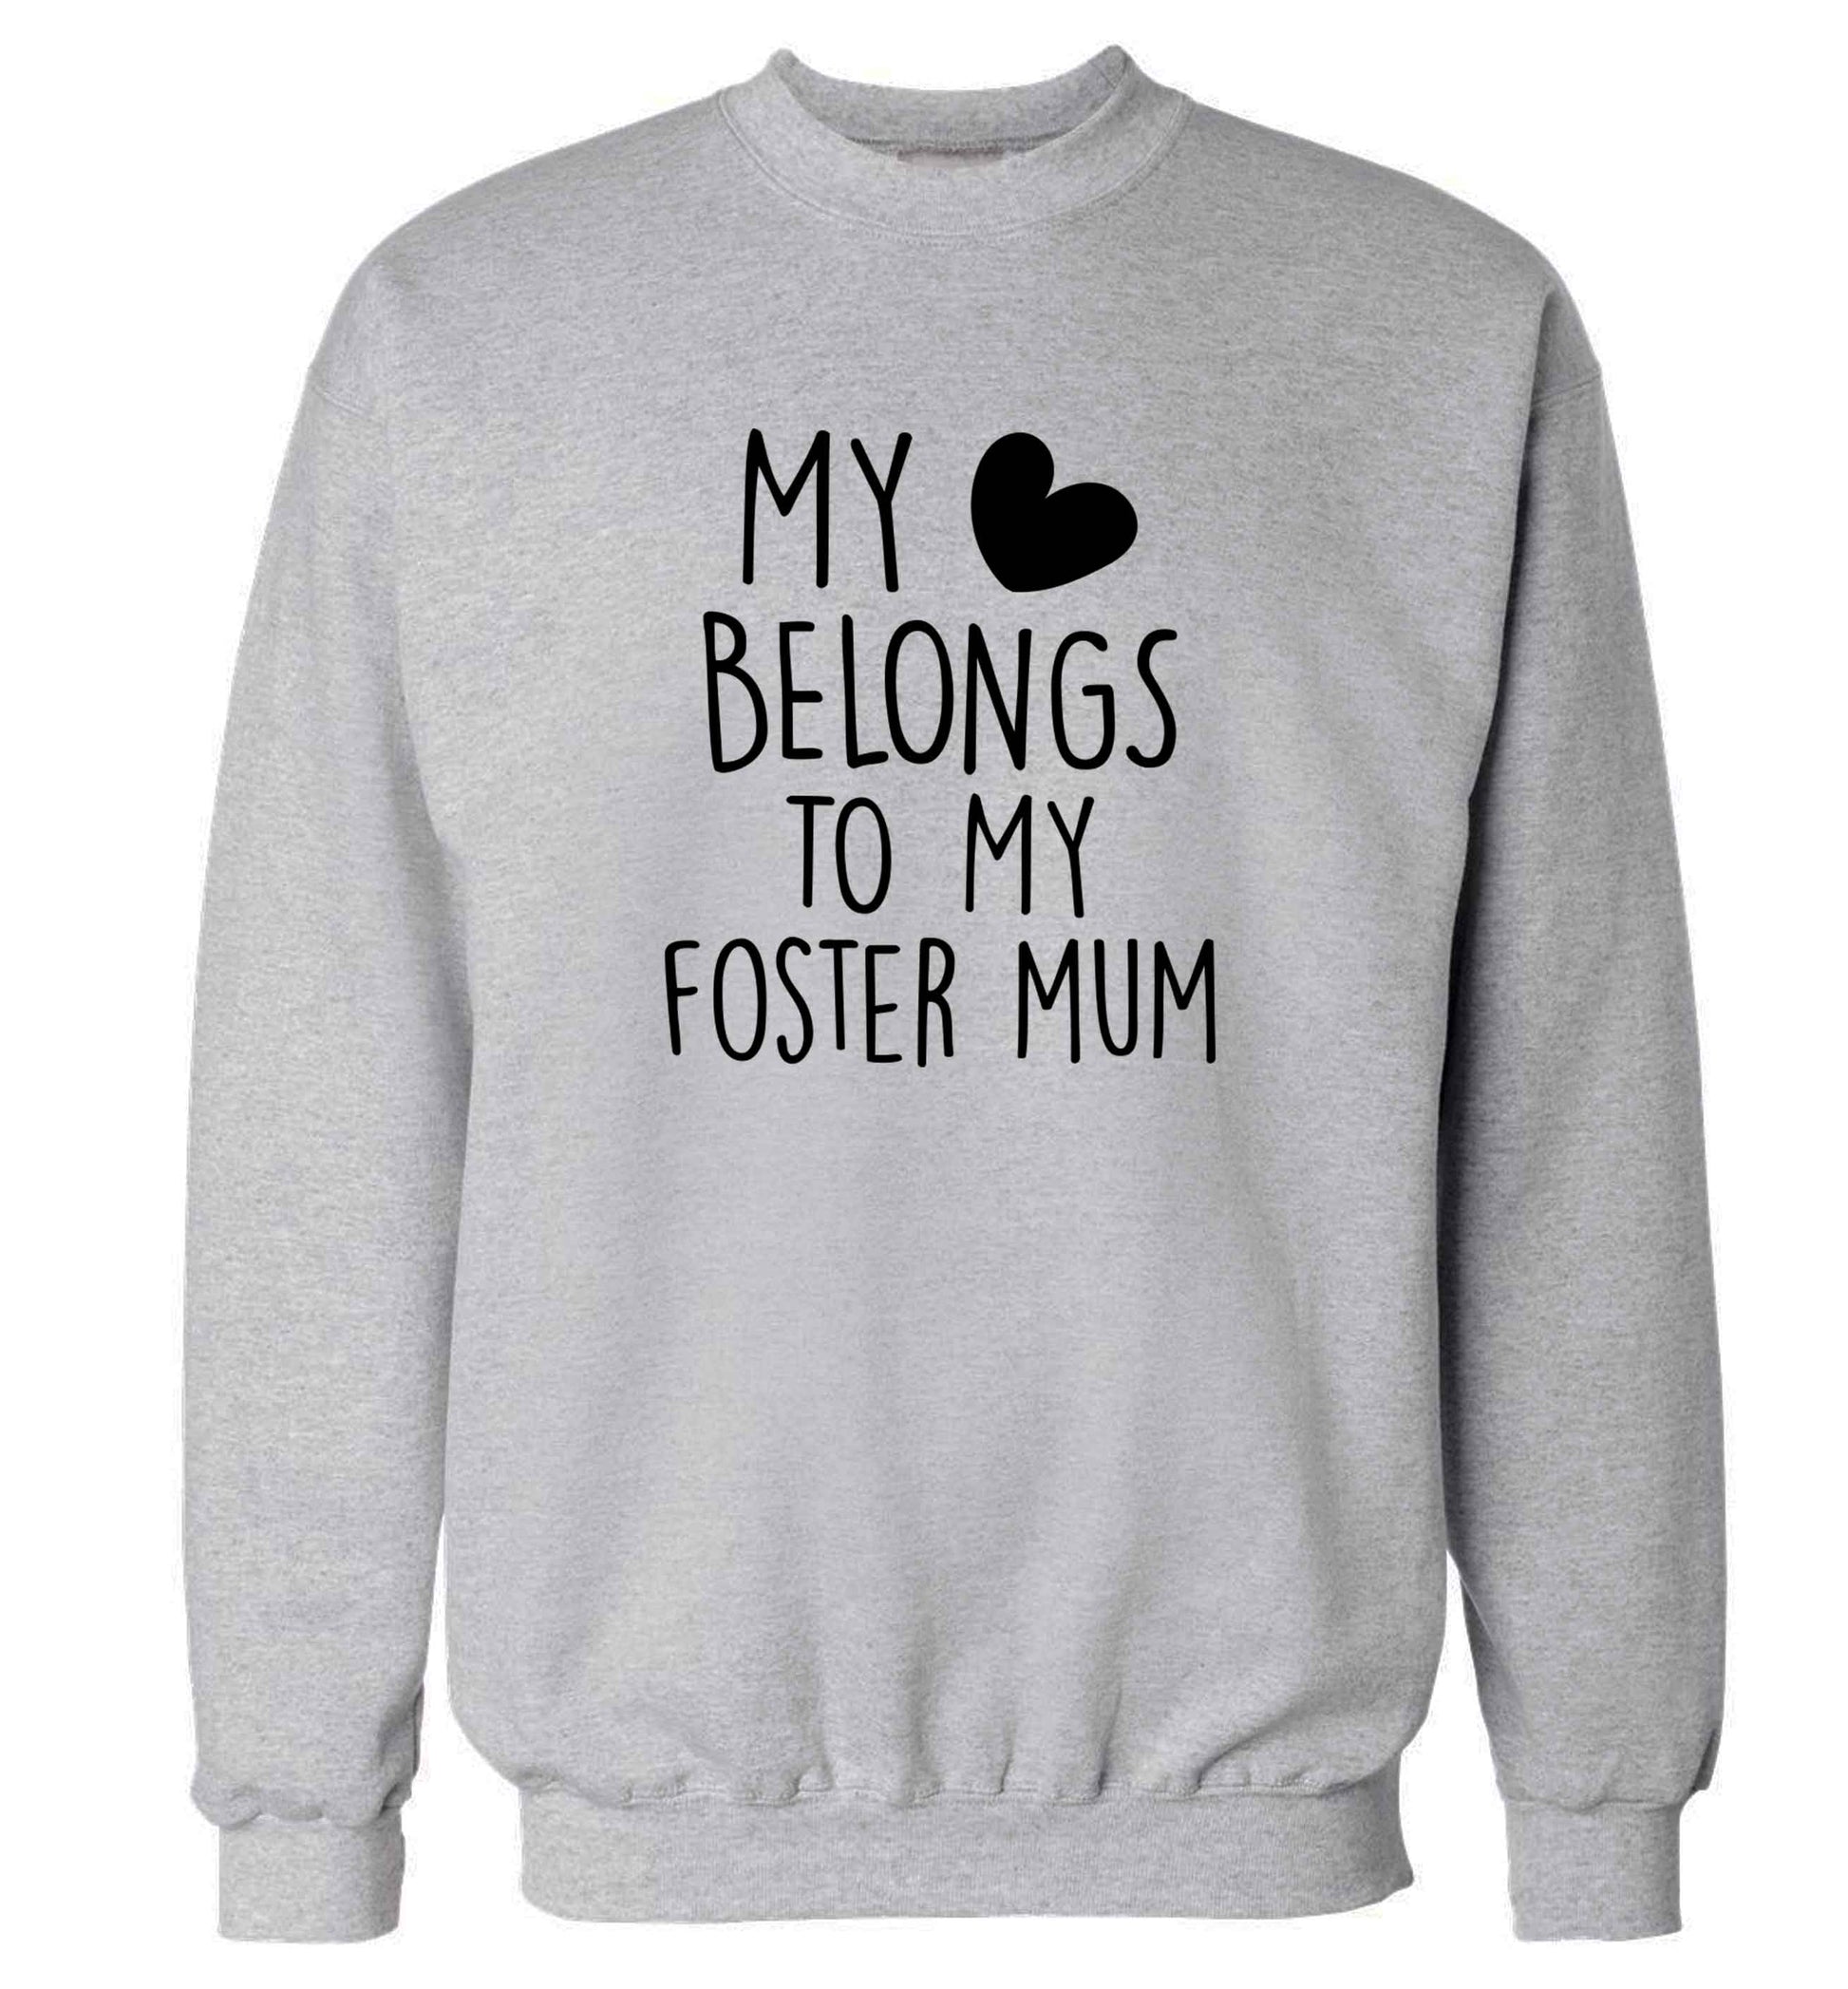 My heart belongs to my foster mum adult's unisex grey sweater 2XL